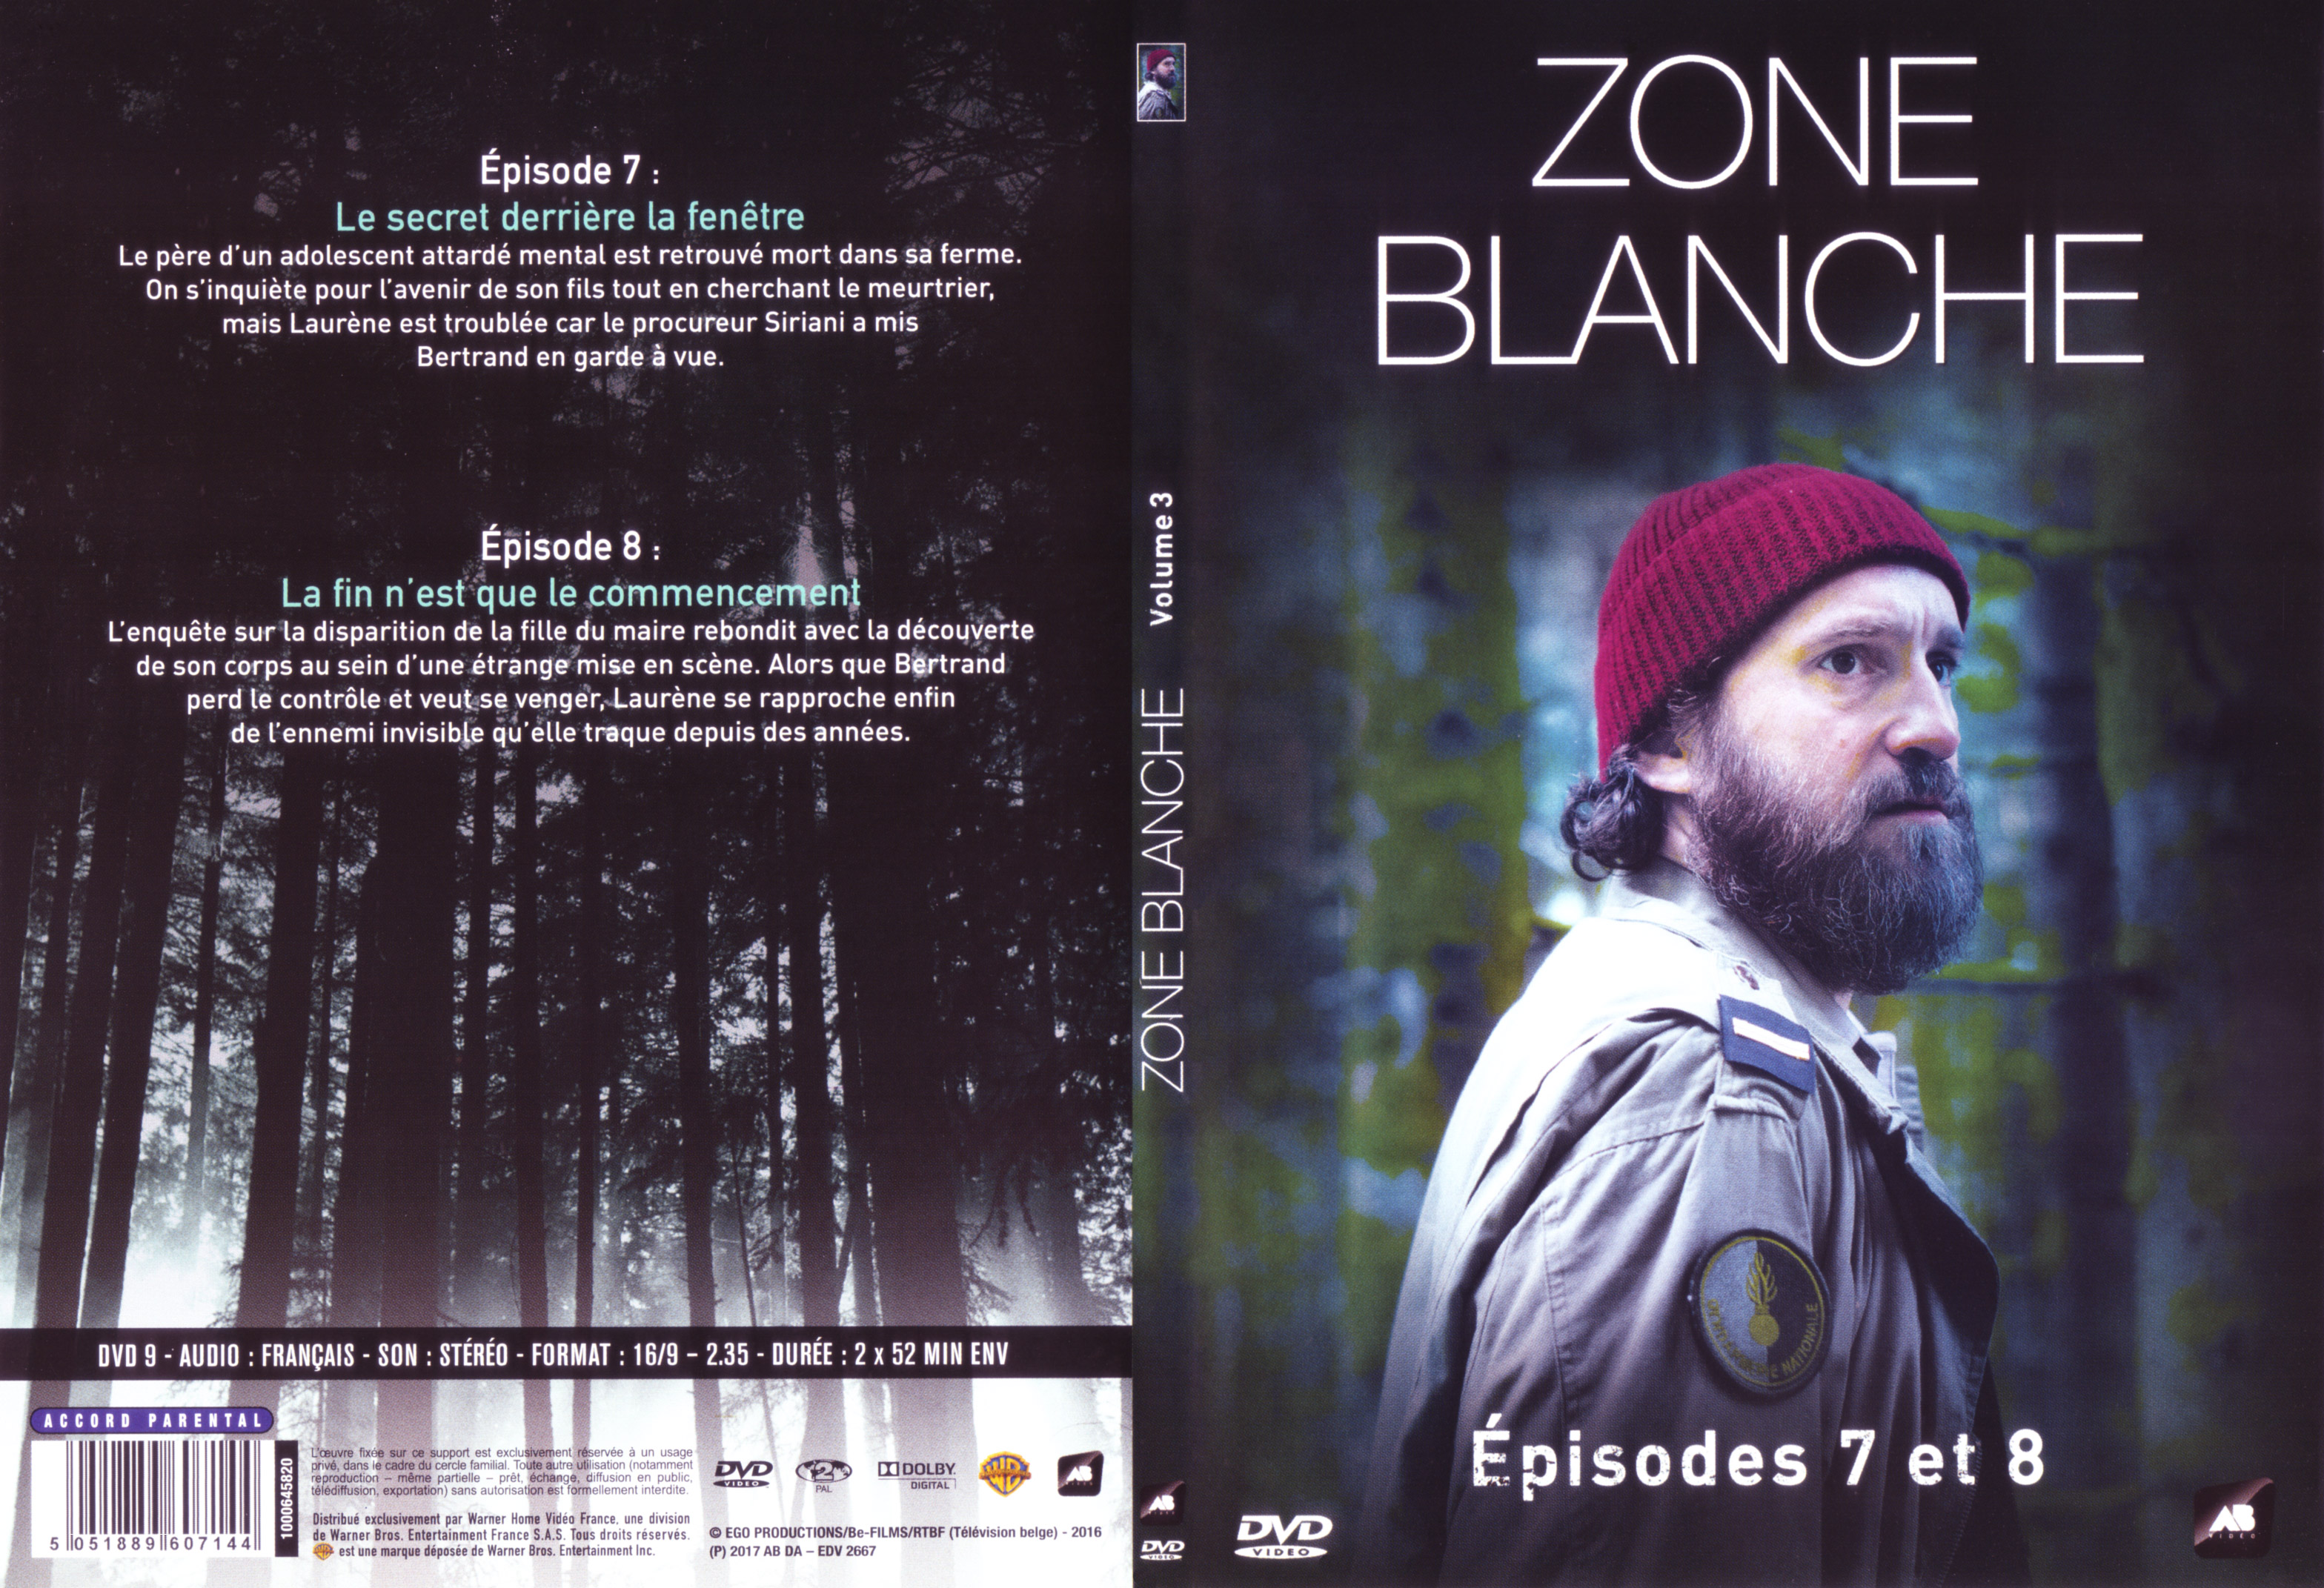 Jaquette DVD Zone blanche pisode 7-8